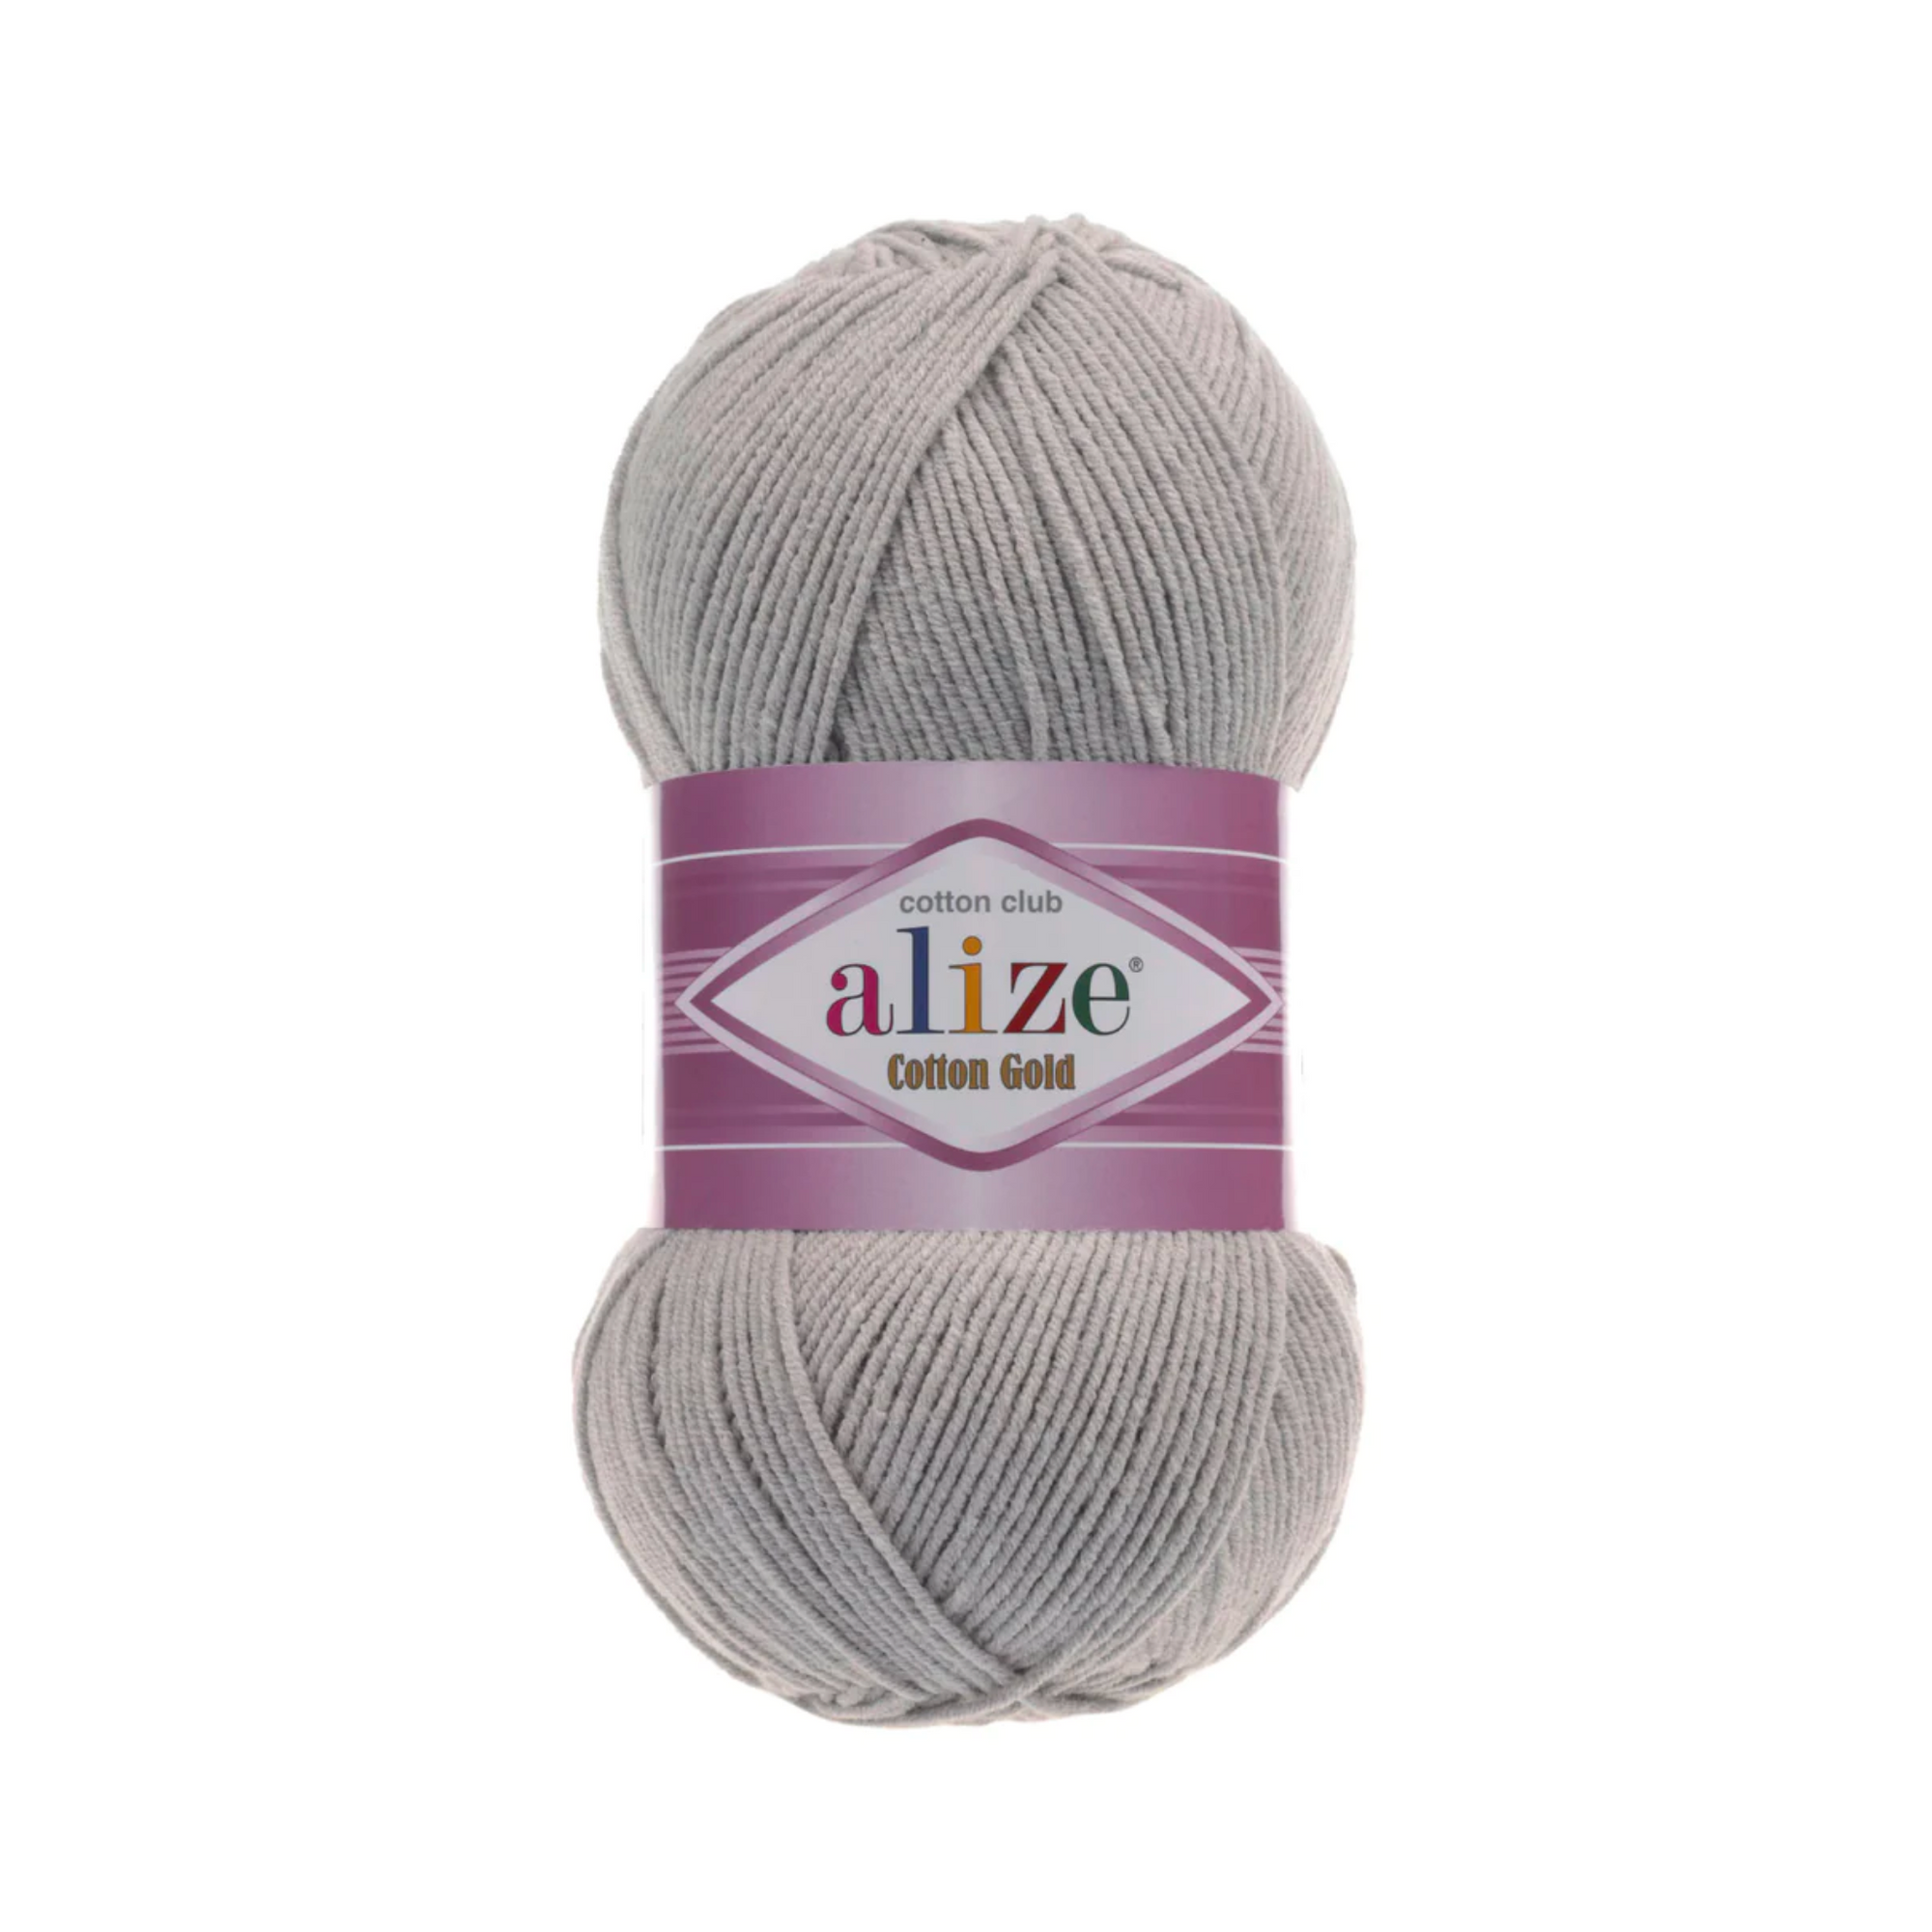 Alize Cotton Gold Knitting Yarn, Blue - 728